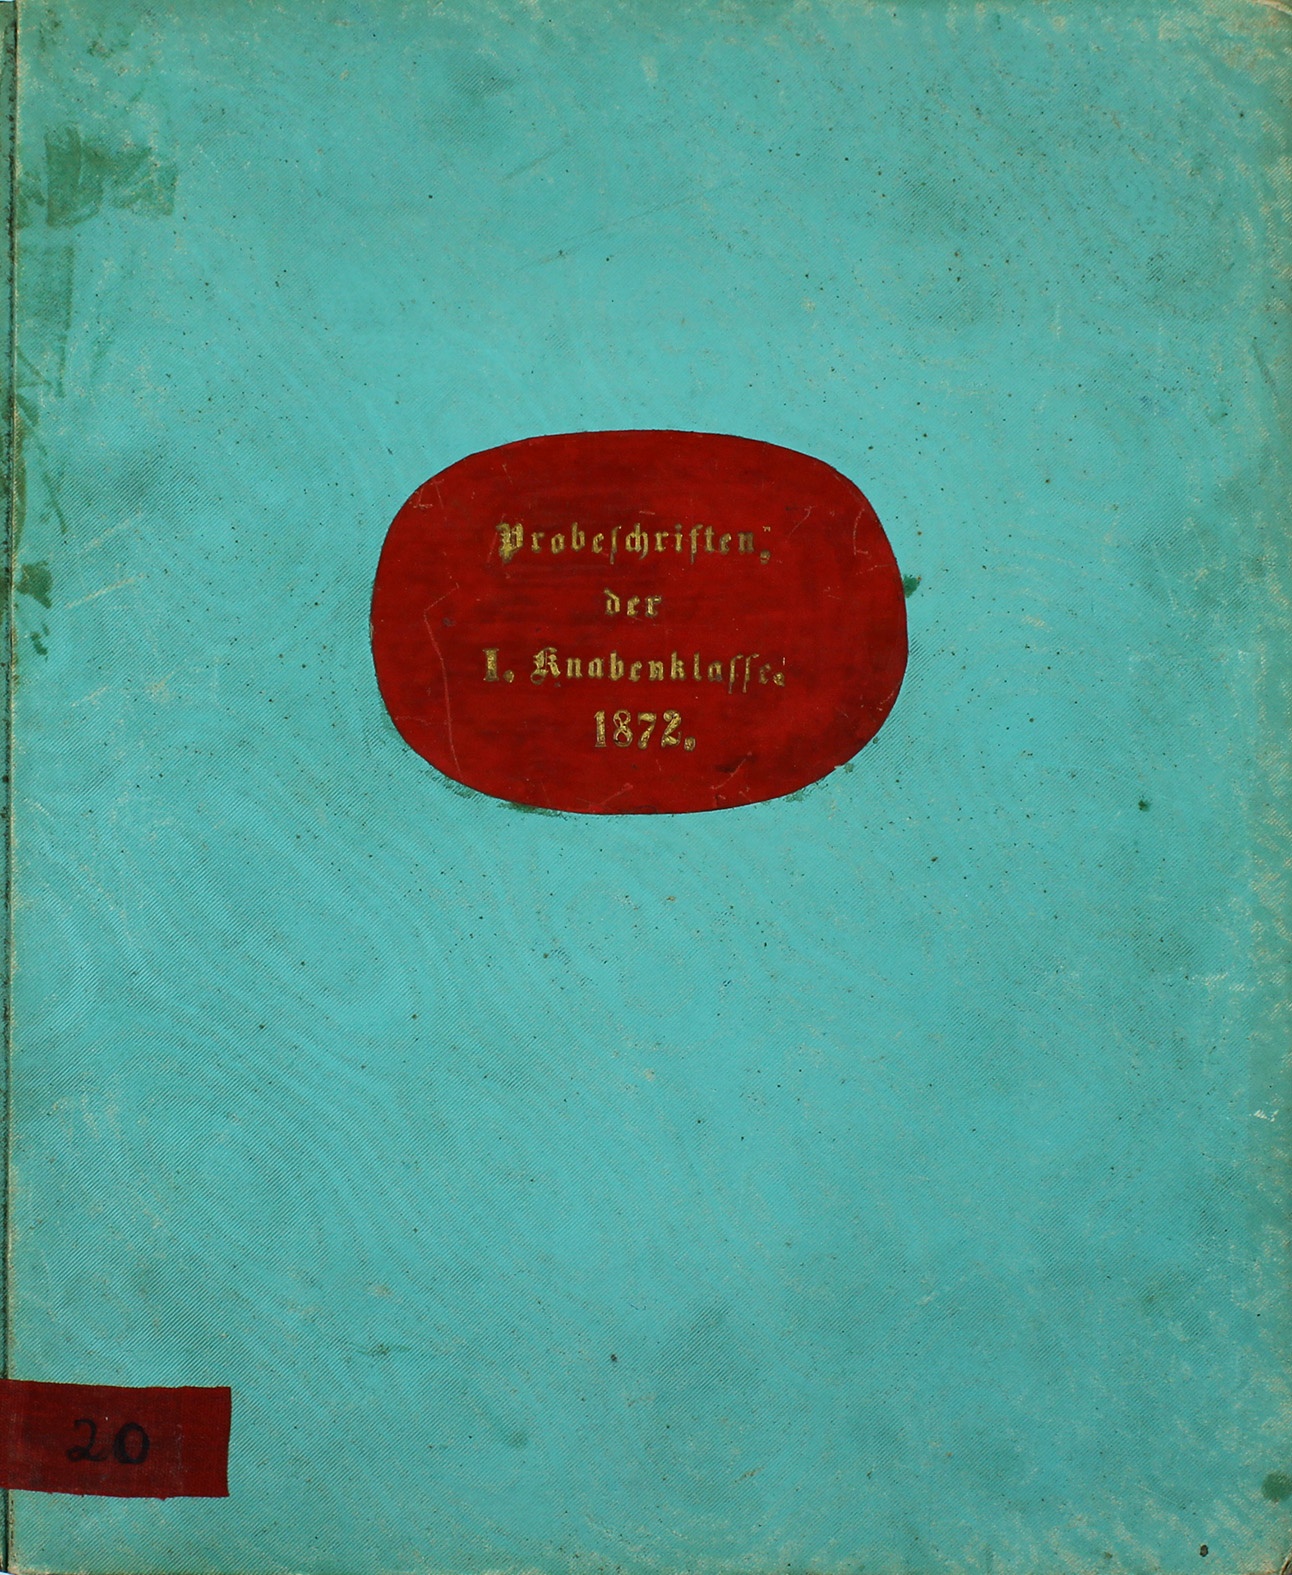 Probeschriften der 1. Knabenklasse der Bürgerschule Wolmirstedt, 1872 (Museum Wolmirstedt RR-F)